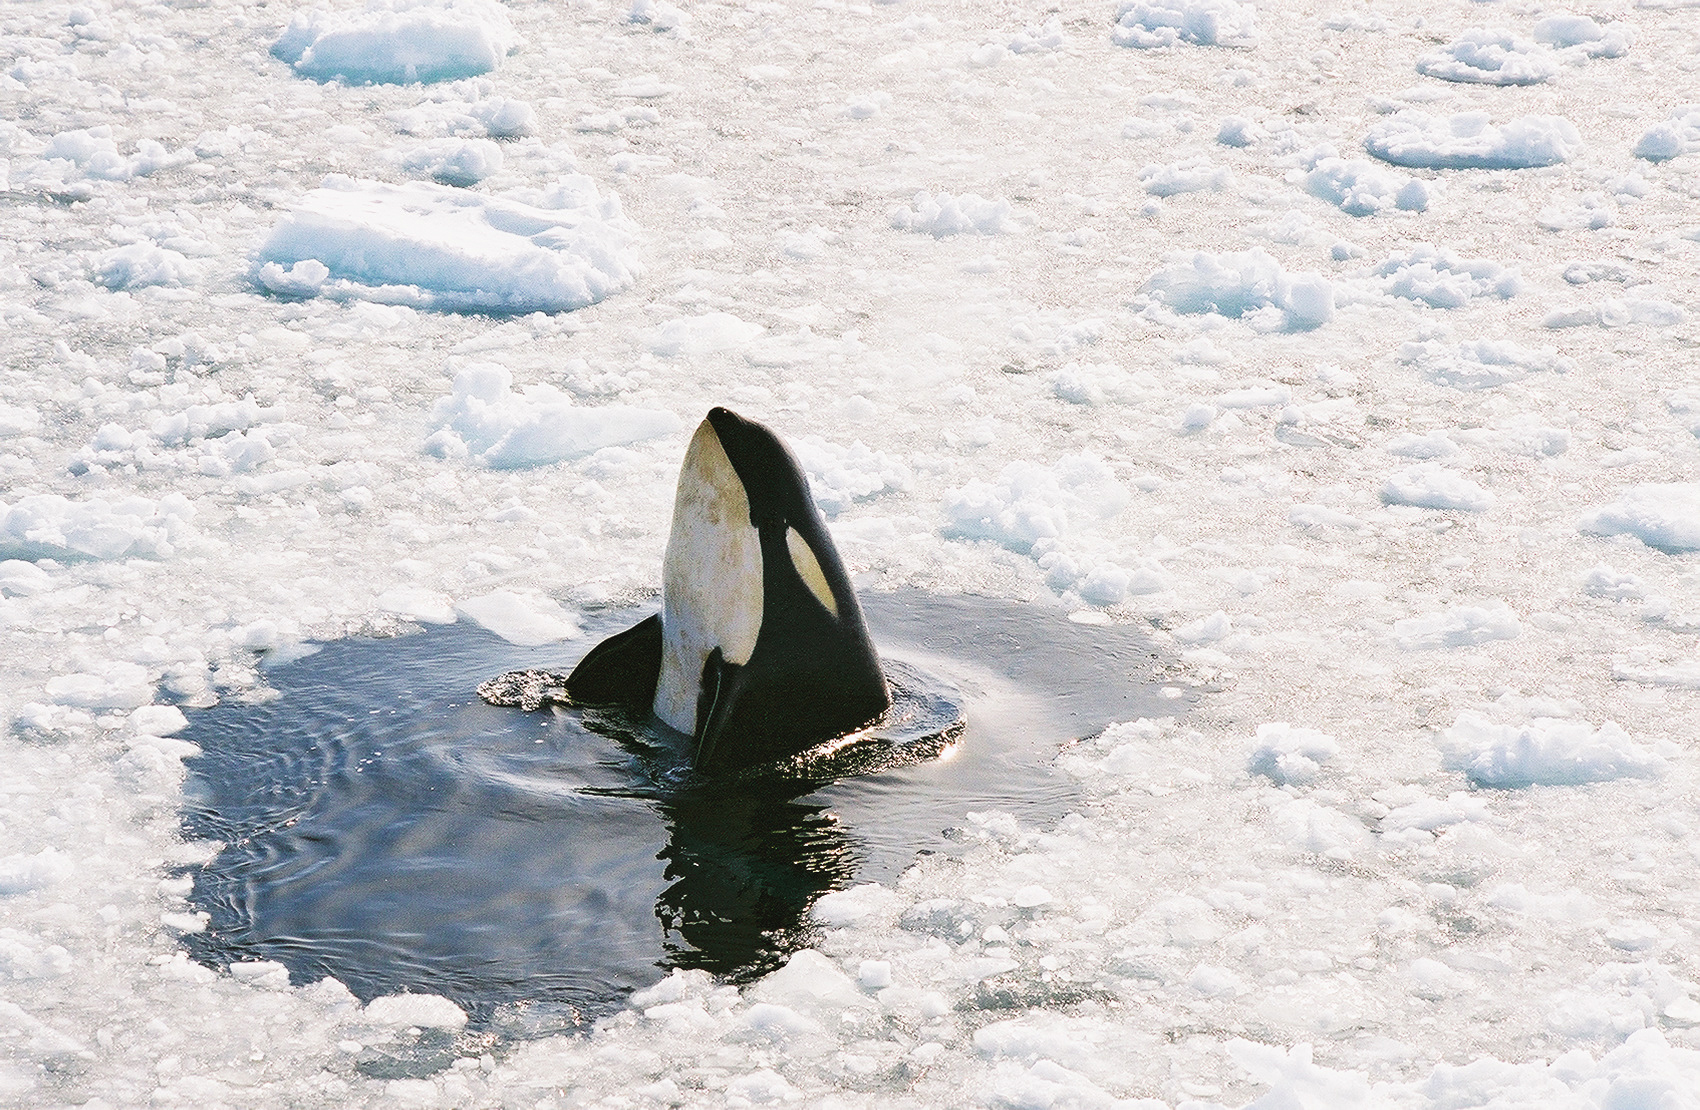 A whale emerges through broken sea ice.